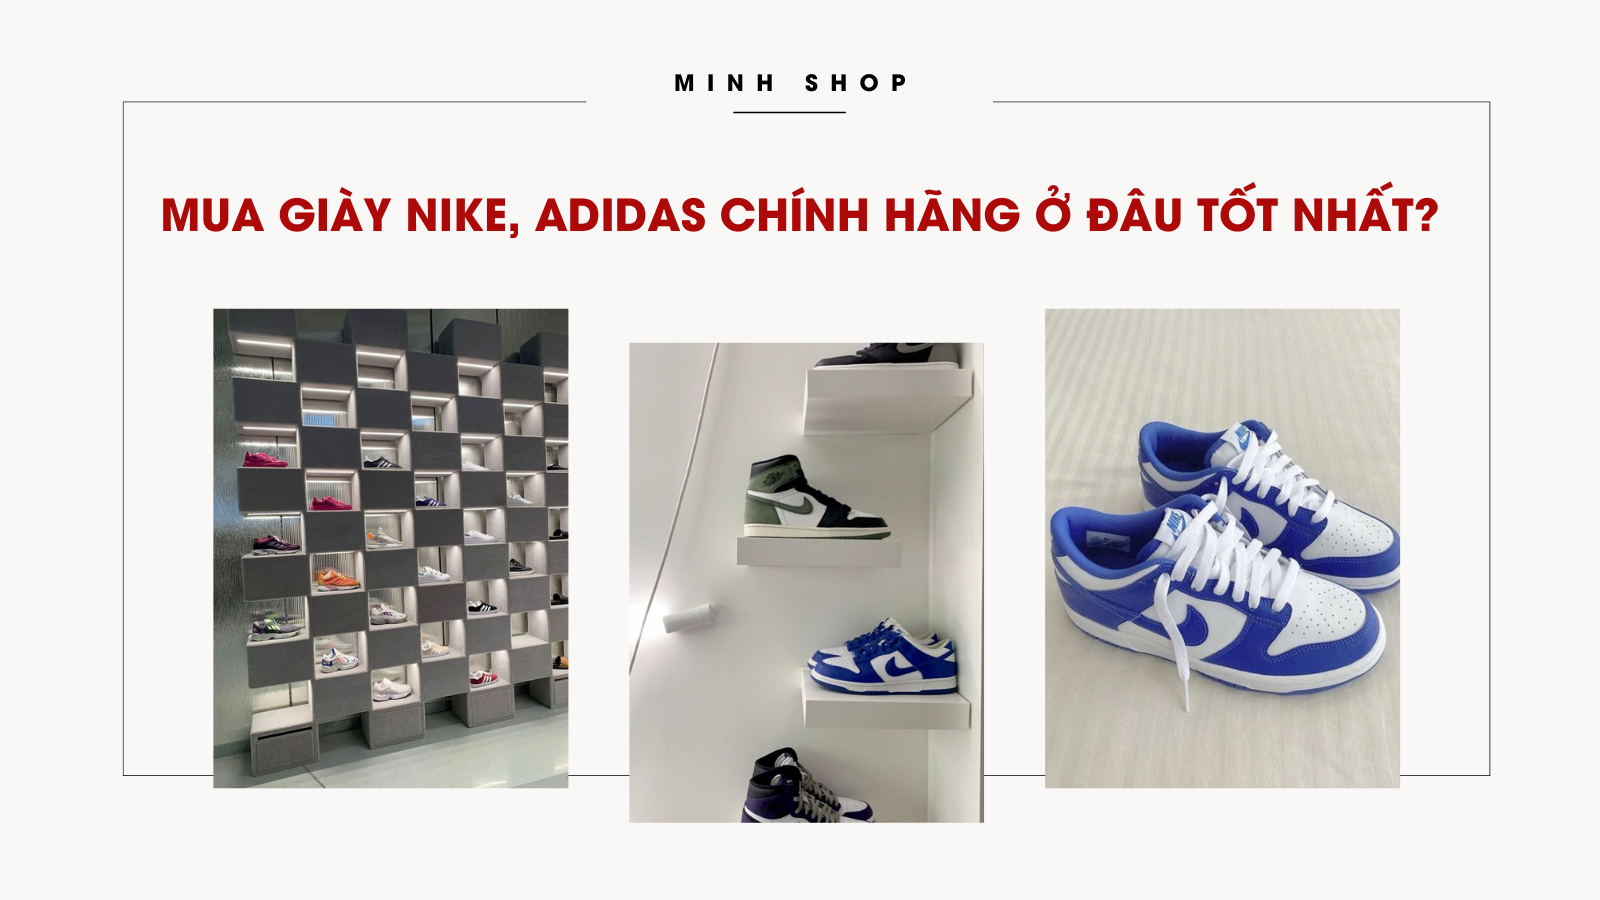 mua-giay-nike-adidas-chinh-hang-o-dau-tot-nhat